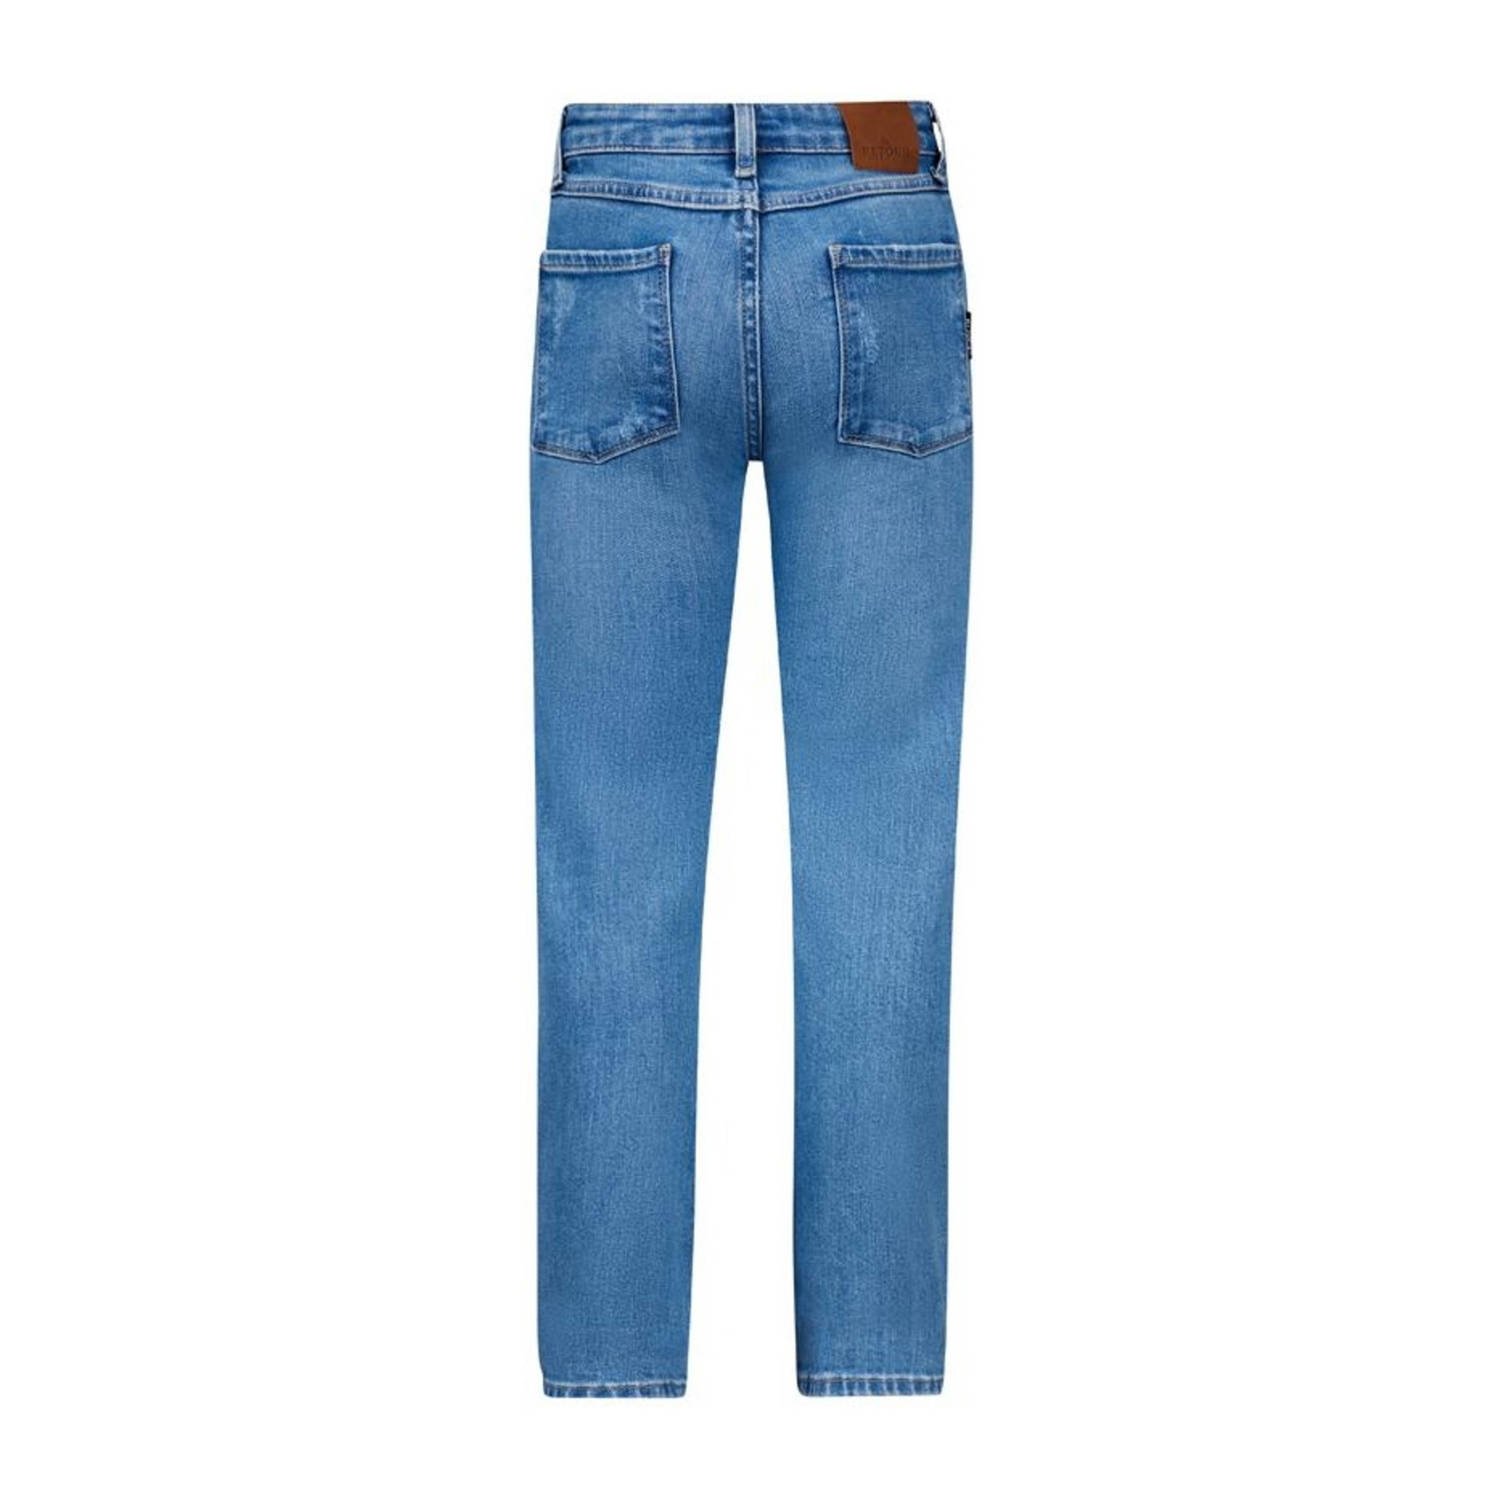 Retour Jeans loose fit jeans Glennis Vintage light blue denim